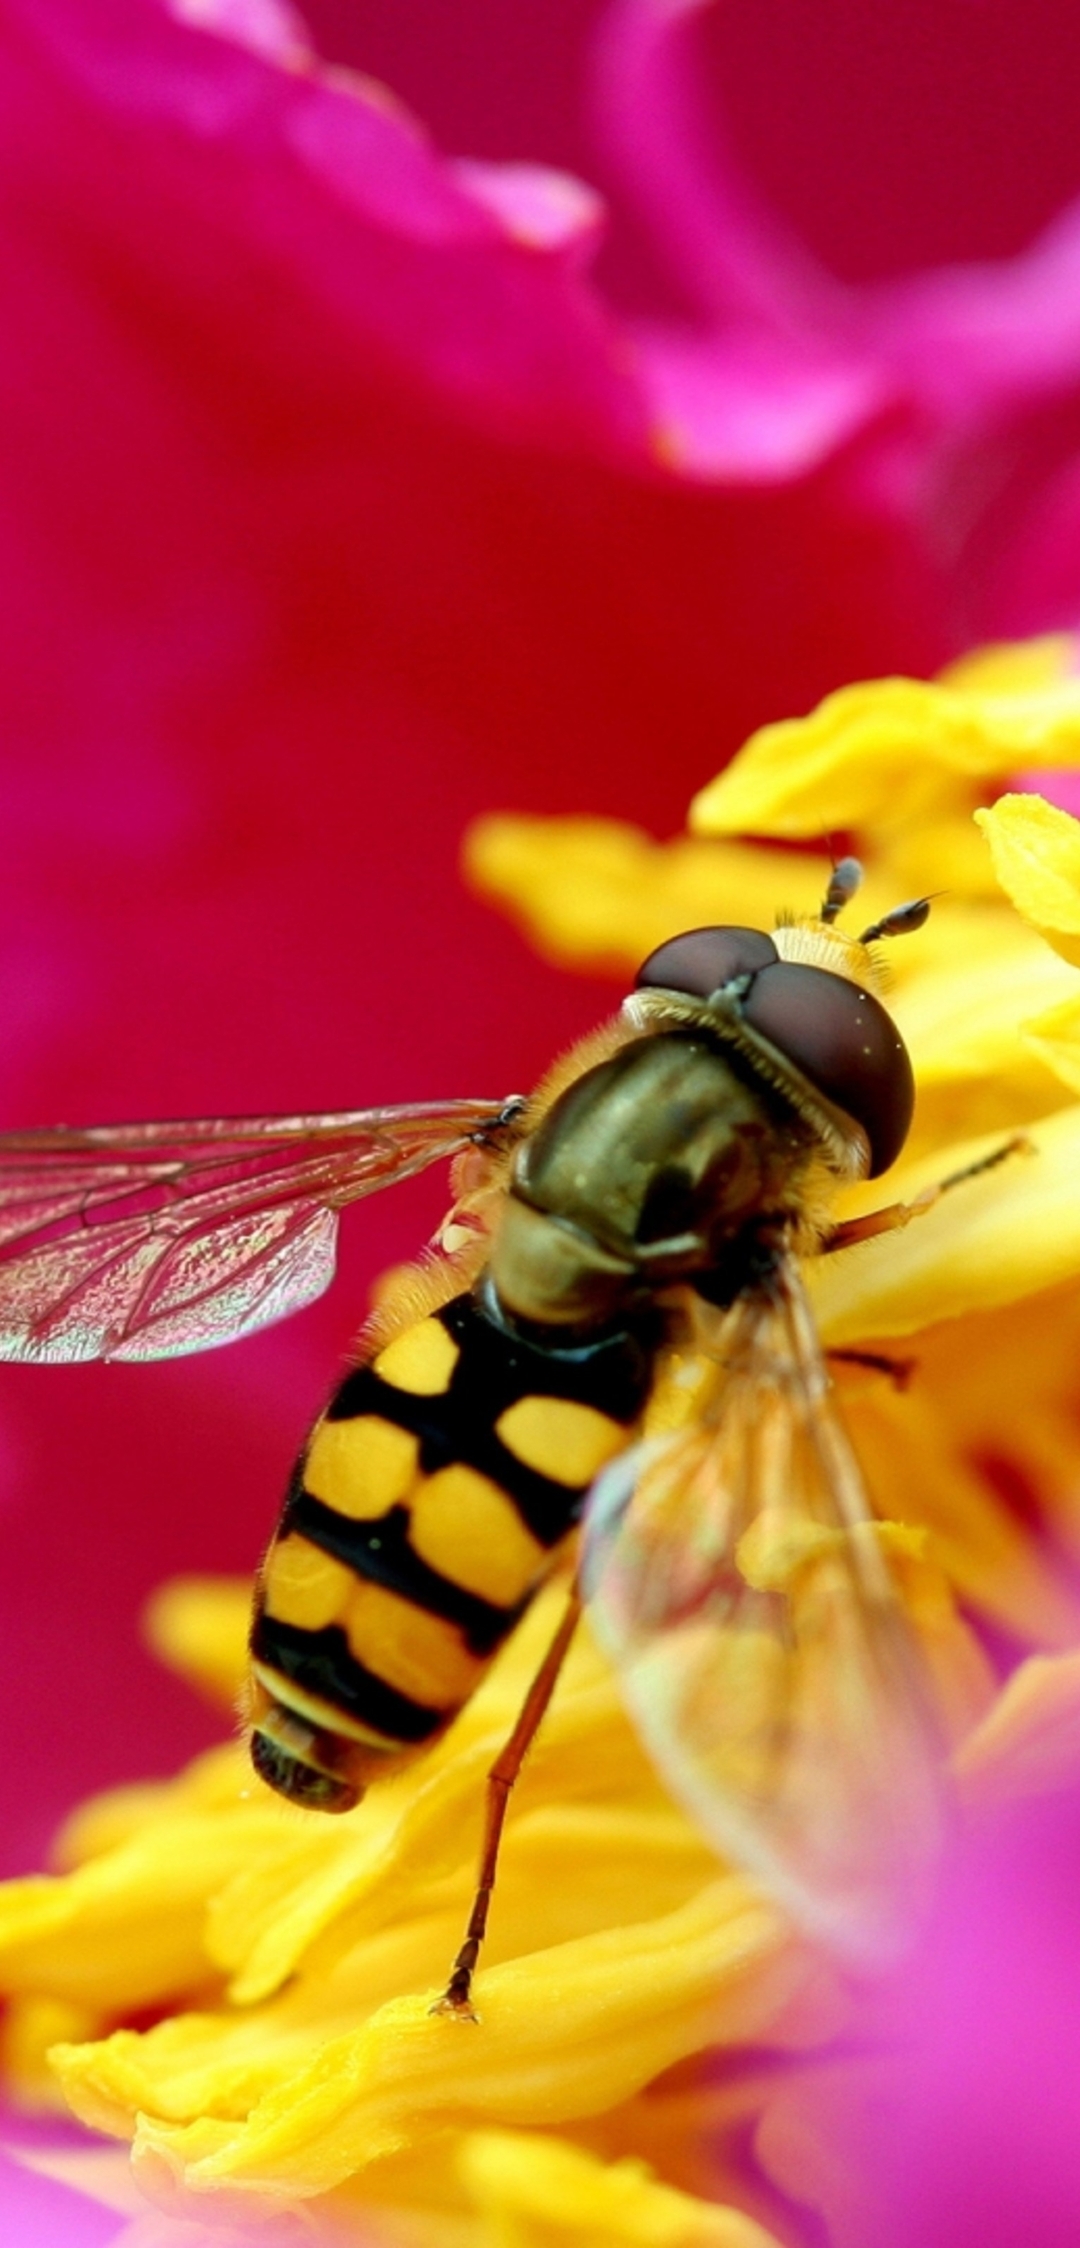 Image: Fly, Sirpa, Syrphus ribesii, flower, heart, stamens